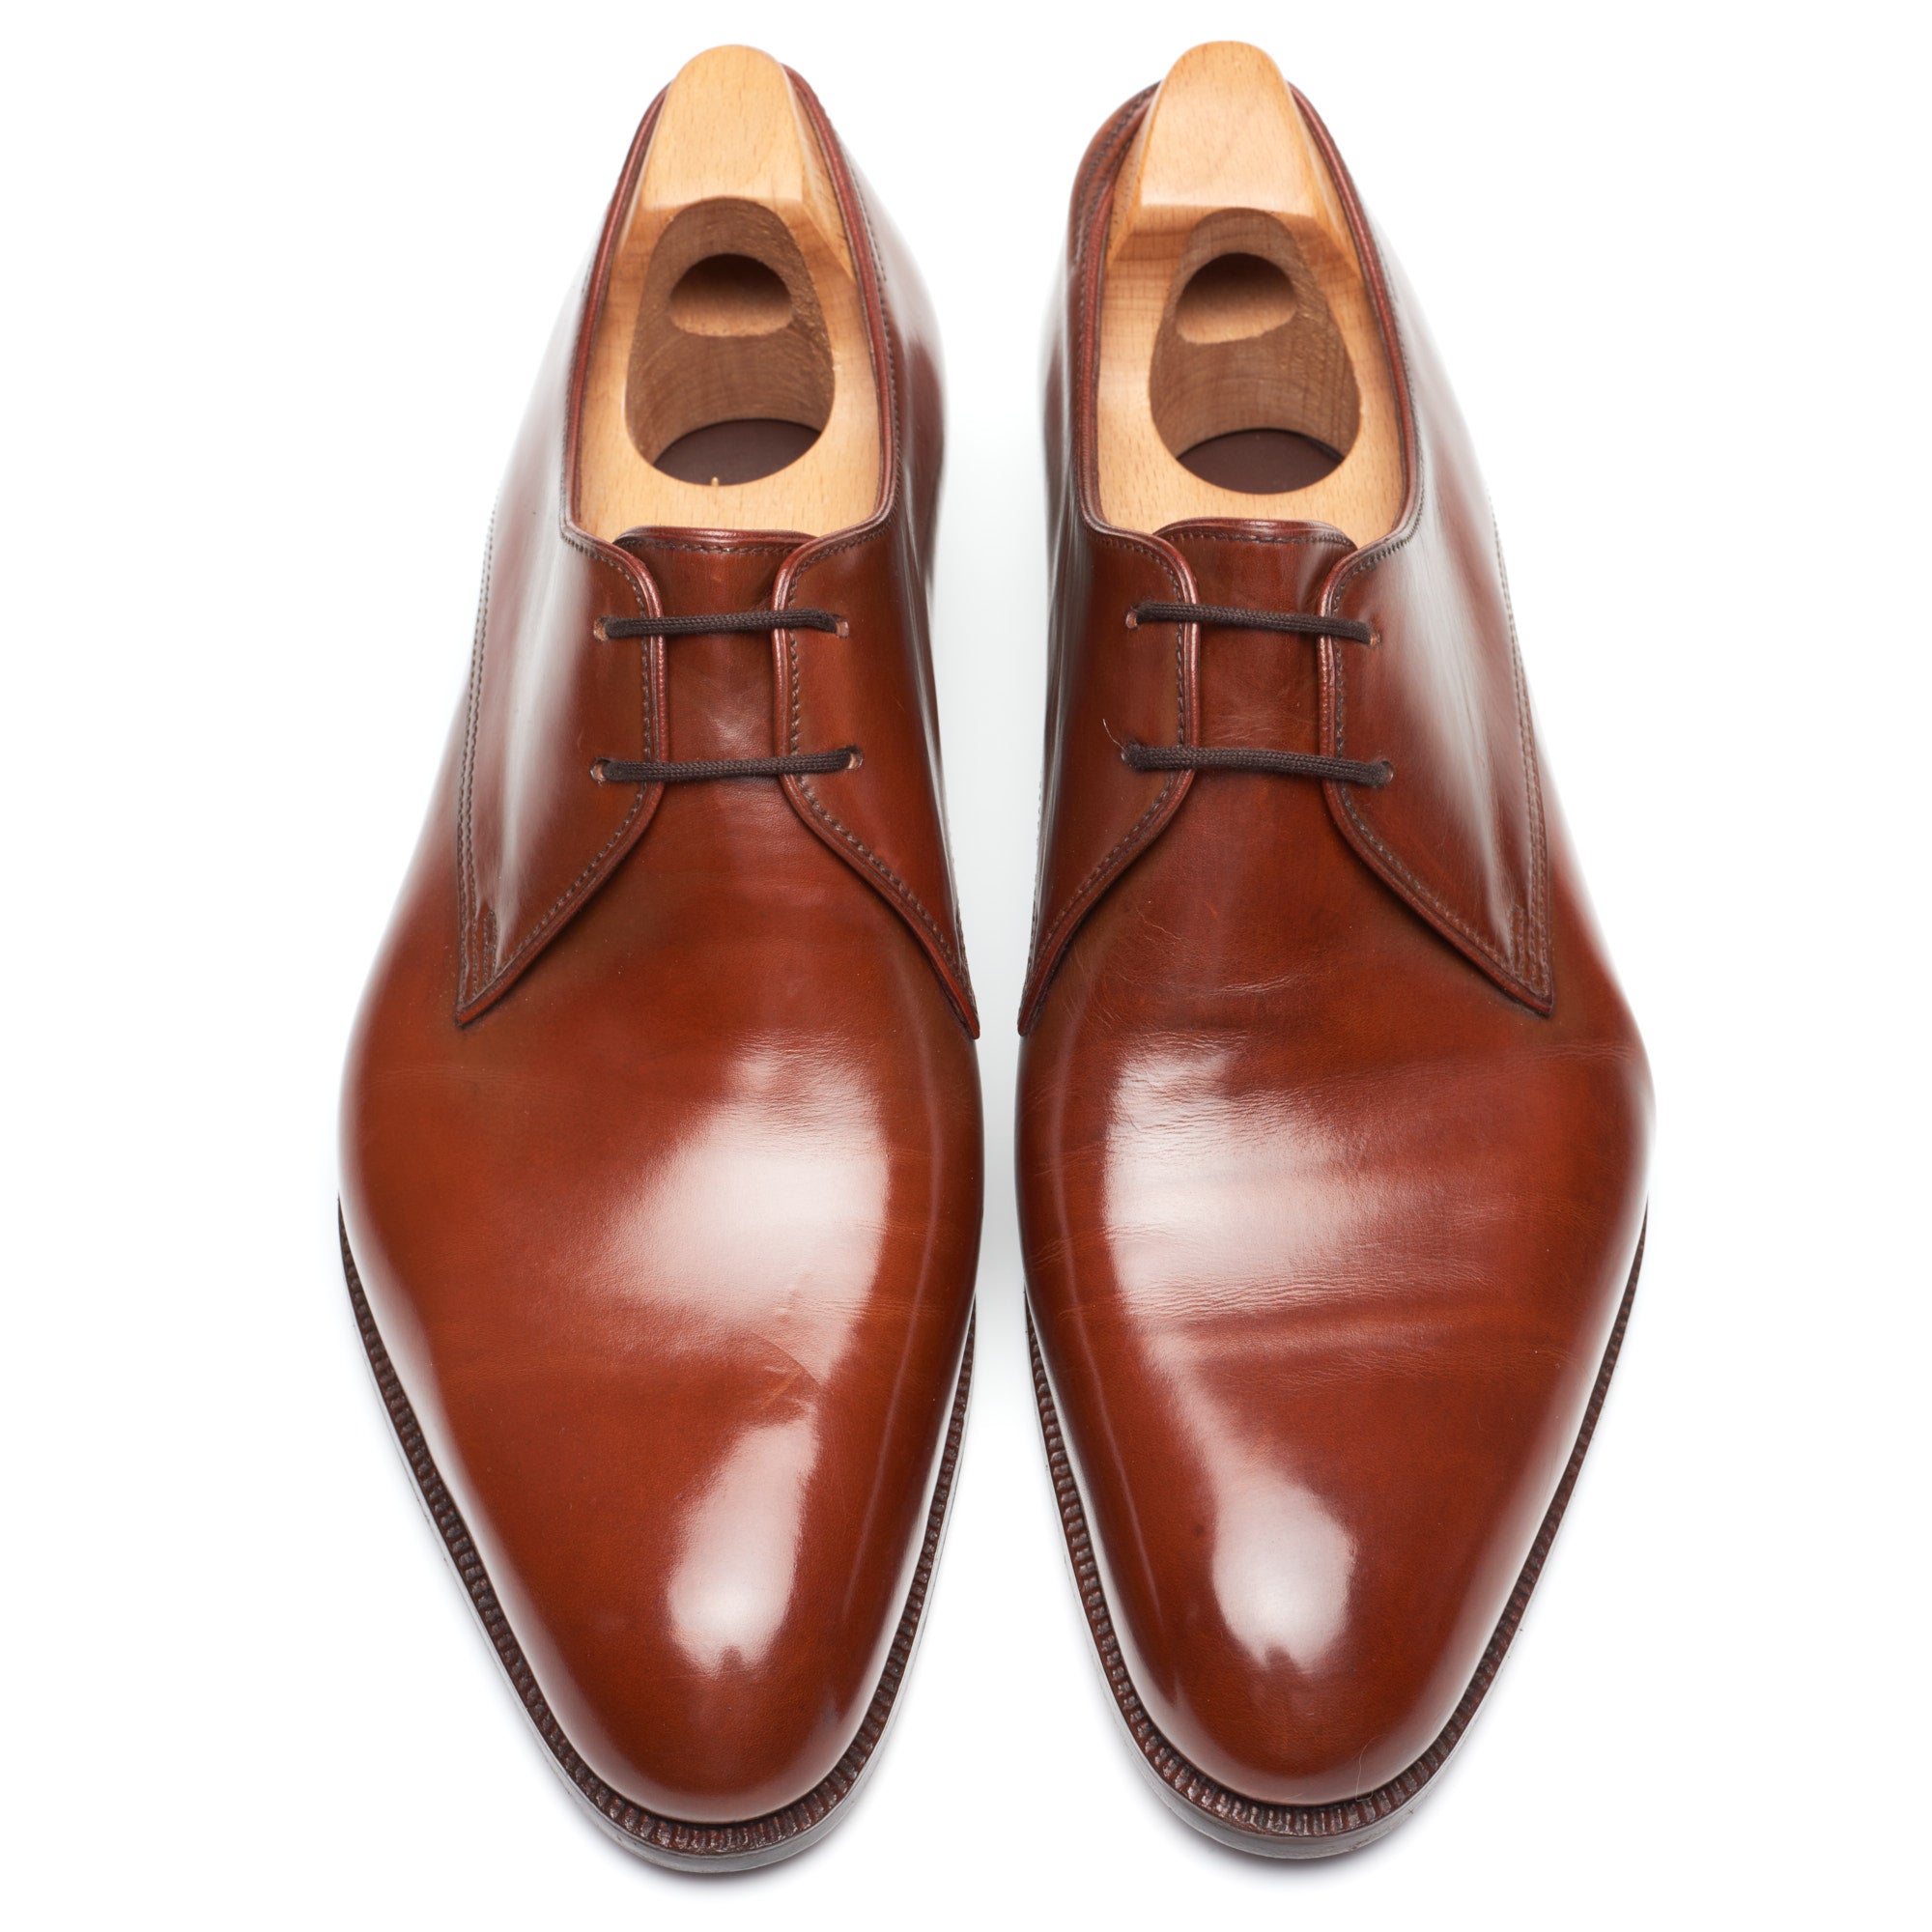 JOHN LOBB Paris Bespoke Brown Calf Leather 2 Eyelet Derby Shoes UK 7.5 US 8.5 JOHN LOBB